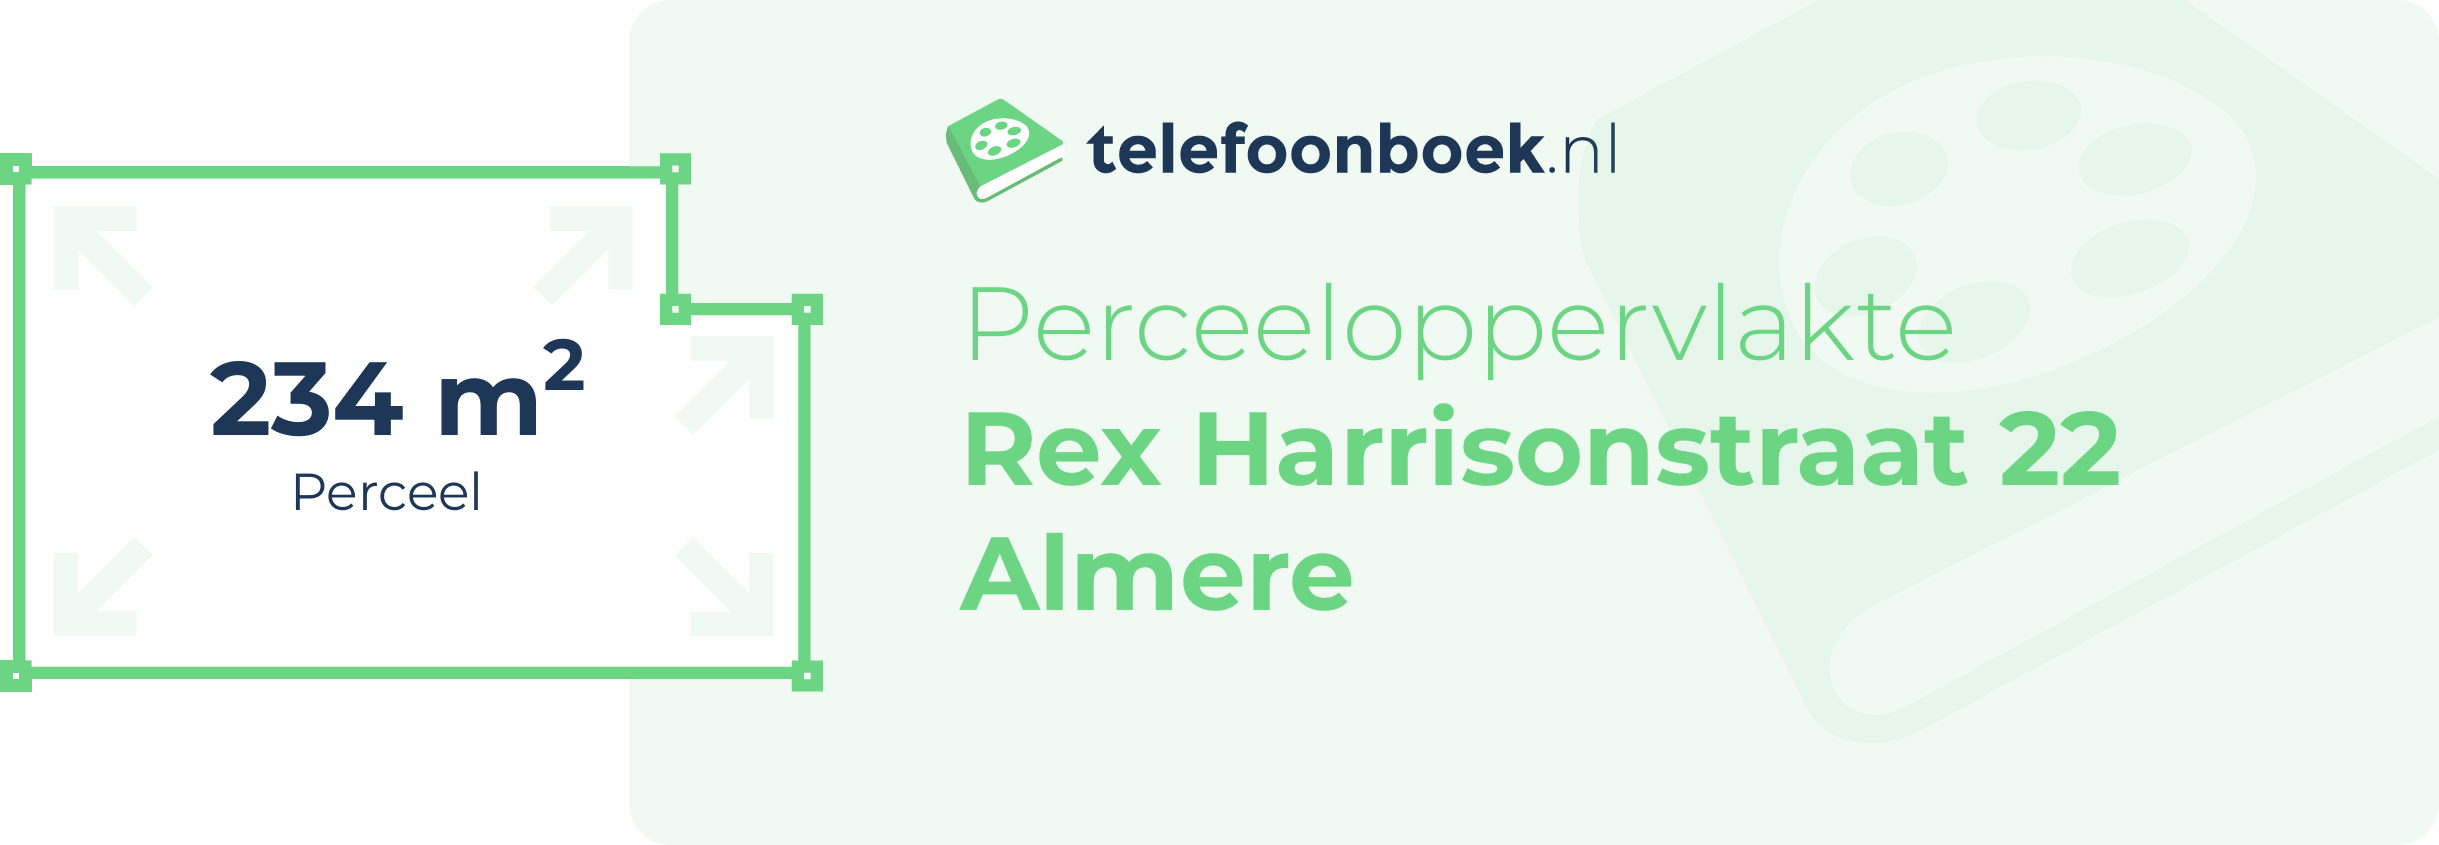 Perceeloppervlakte Rex Harrisonstraat 22 Almere